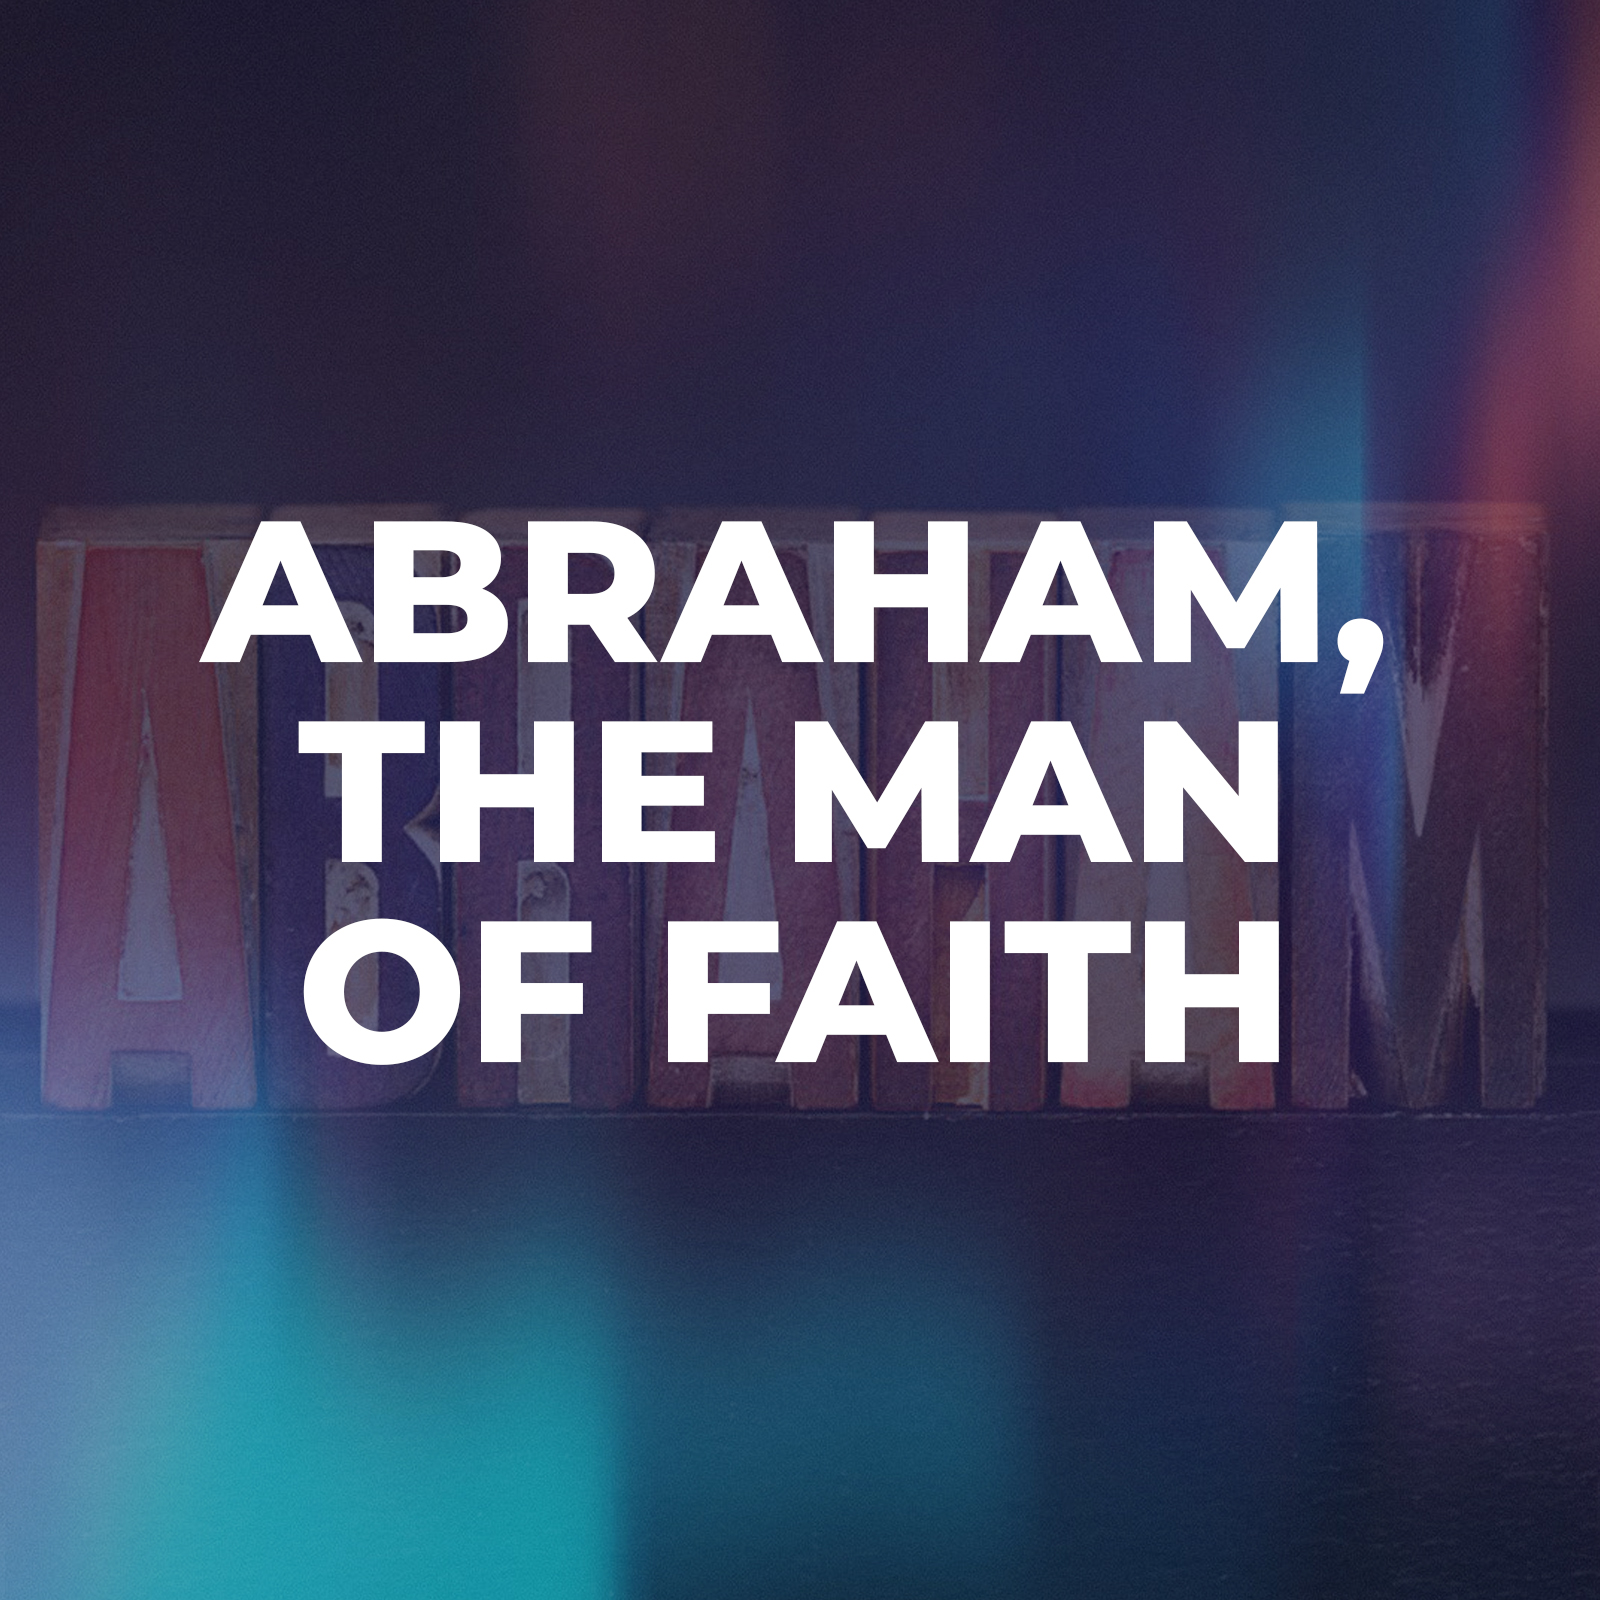 Abraham, The man of faith sermon series on Genesis. Hope Church Huddersfield